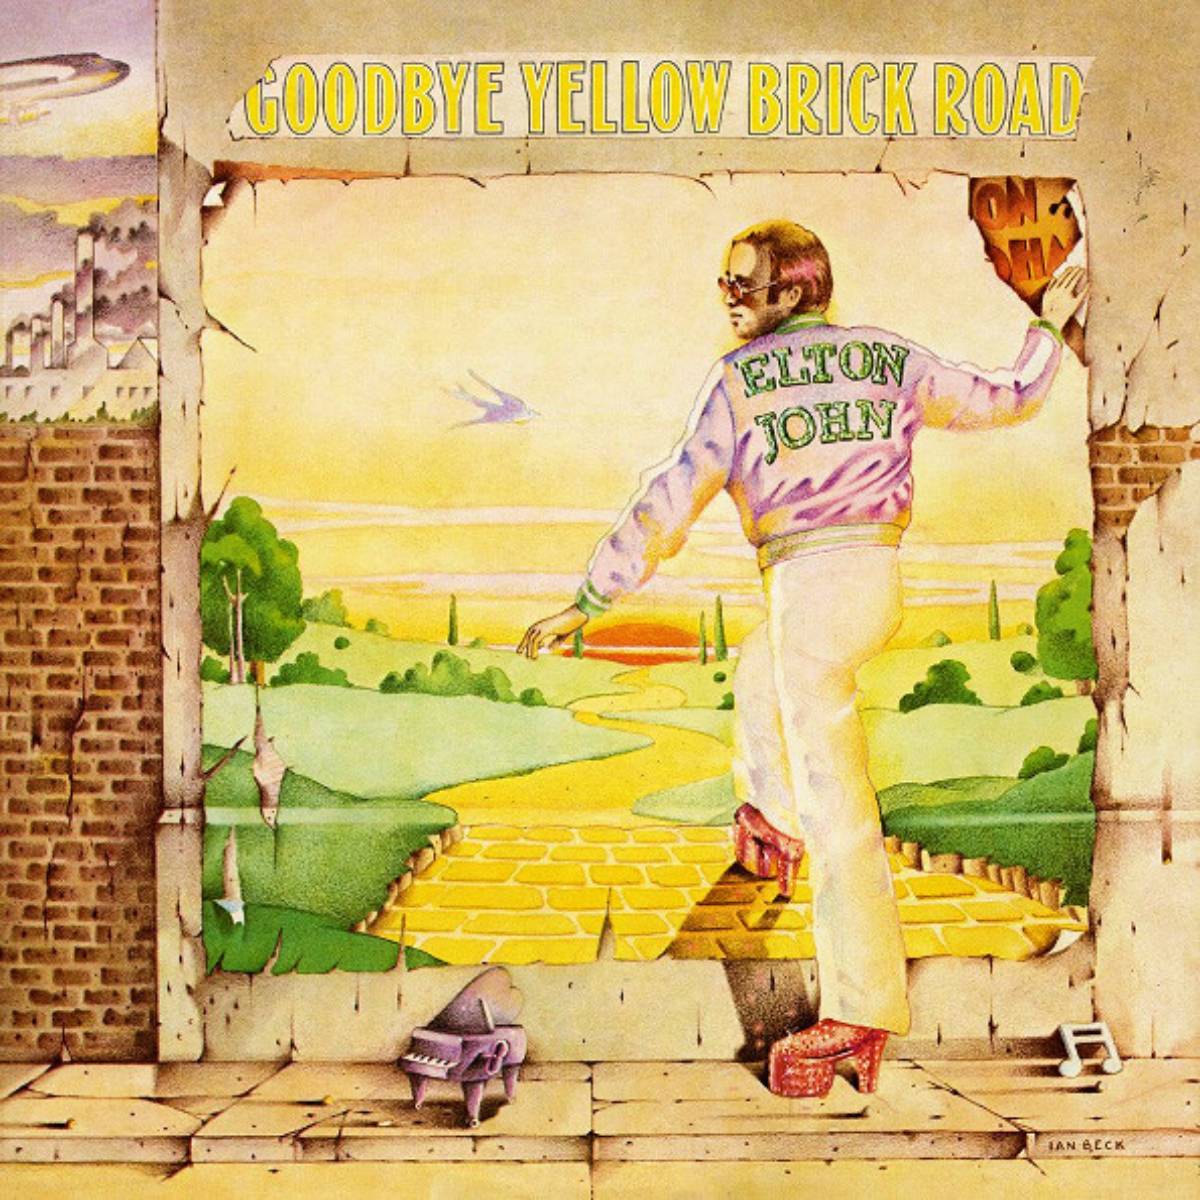 Elton John - "Goodbye Yellow Brick Road" (1973)